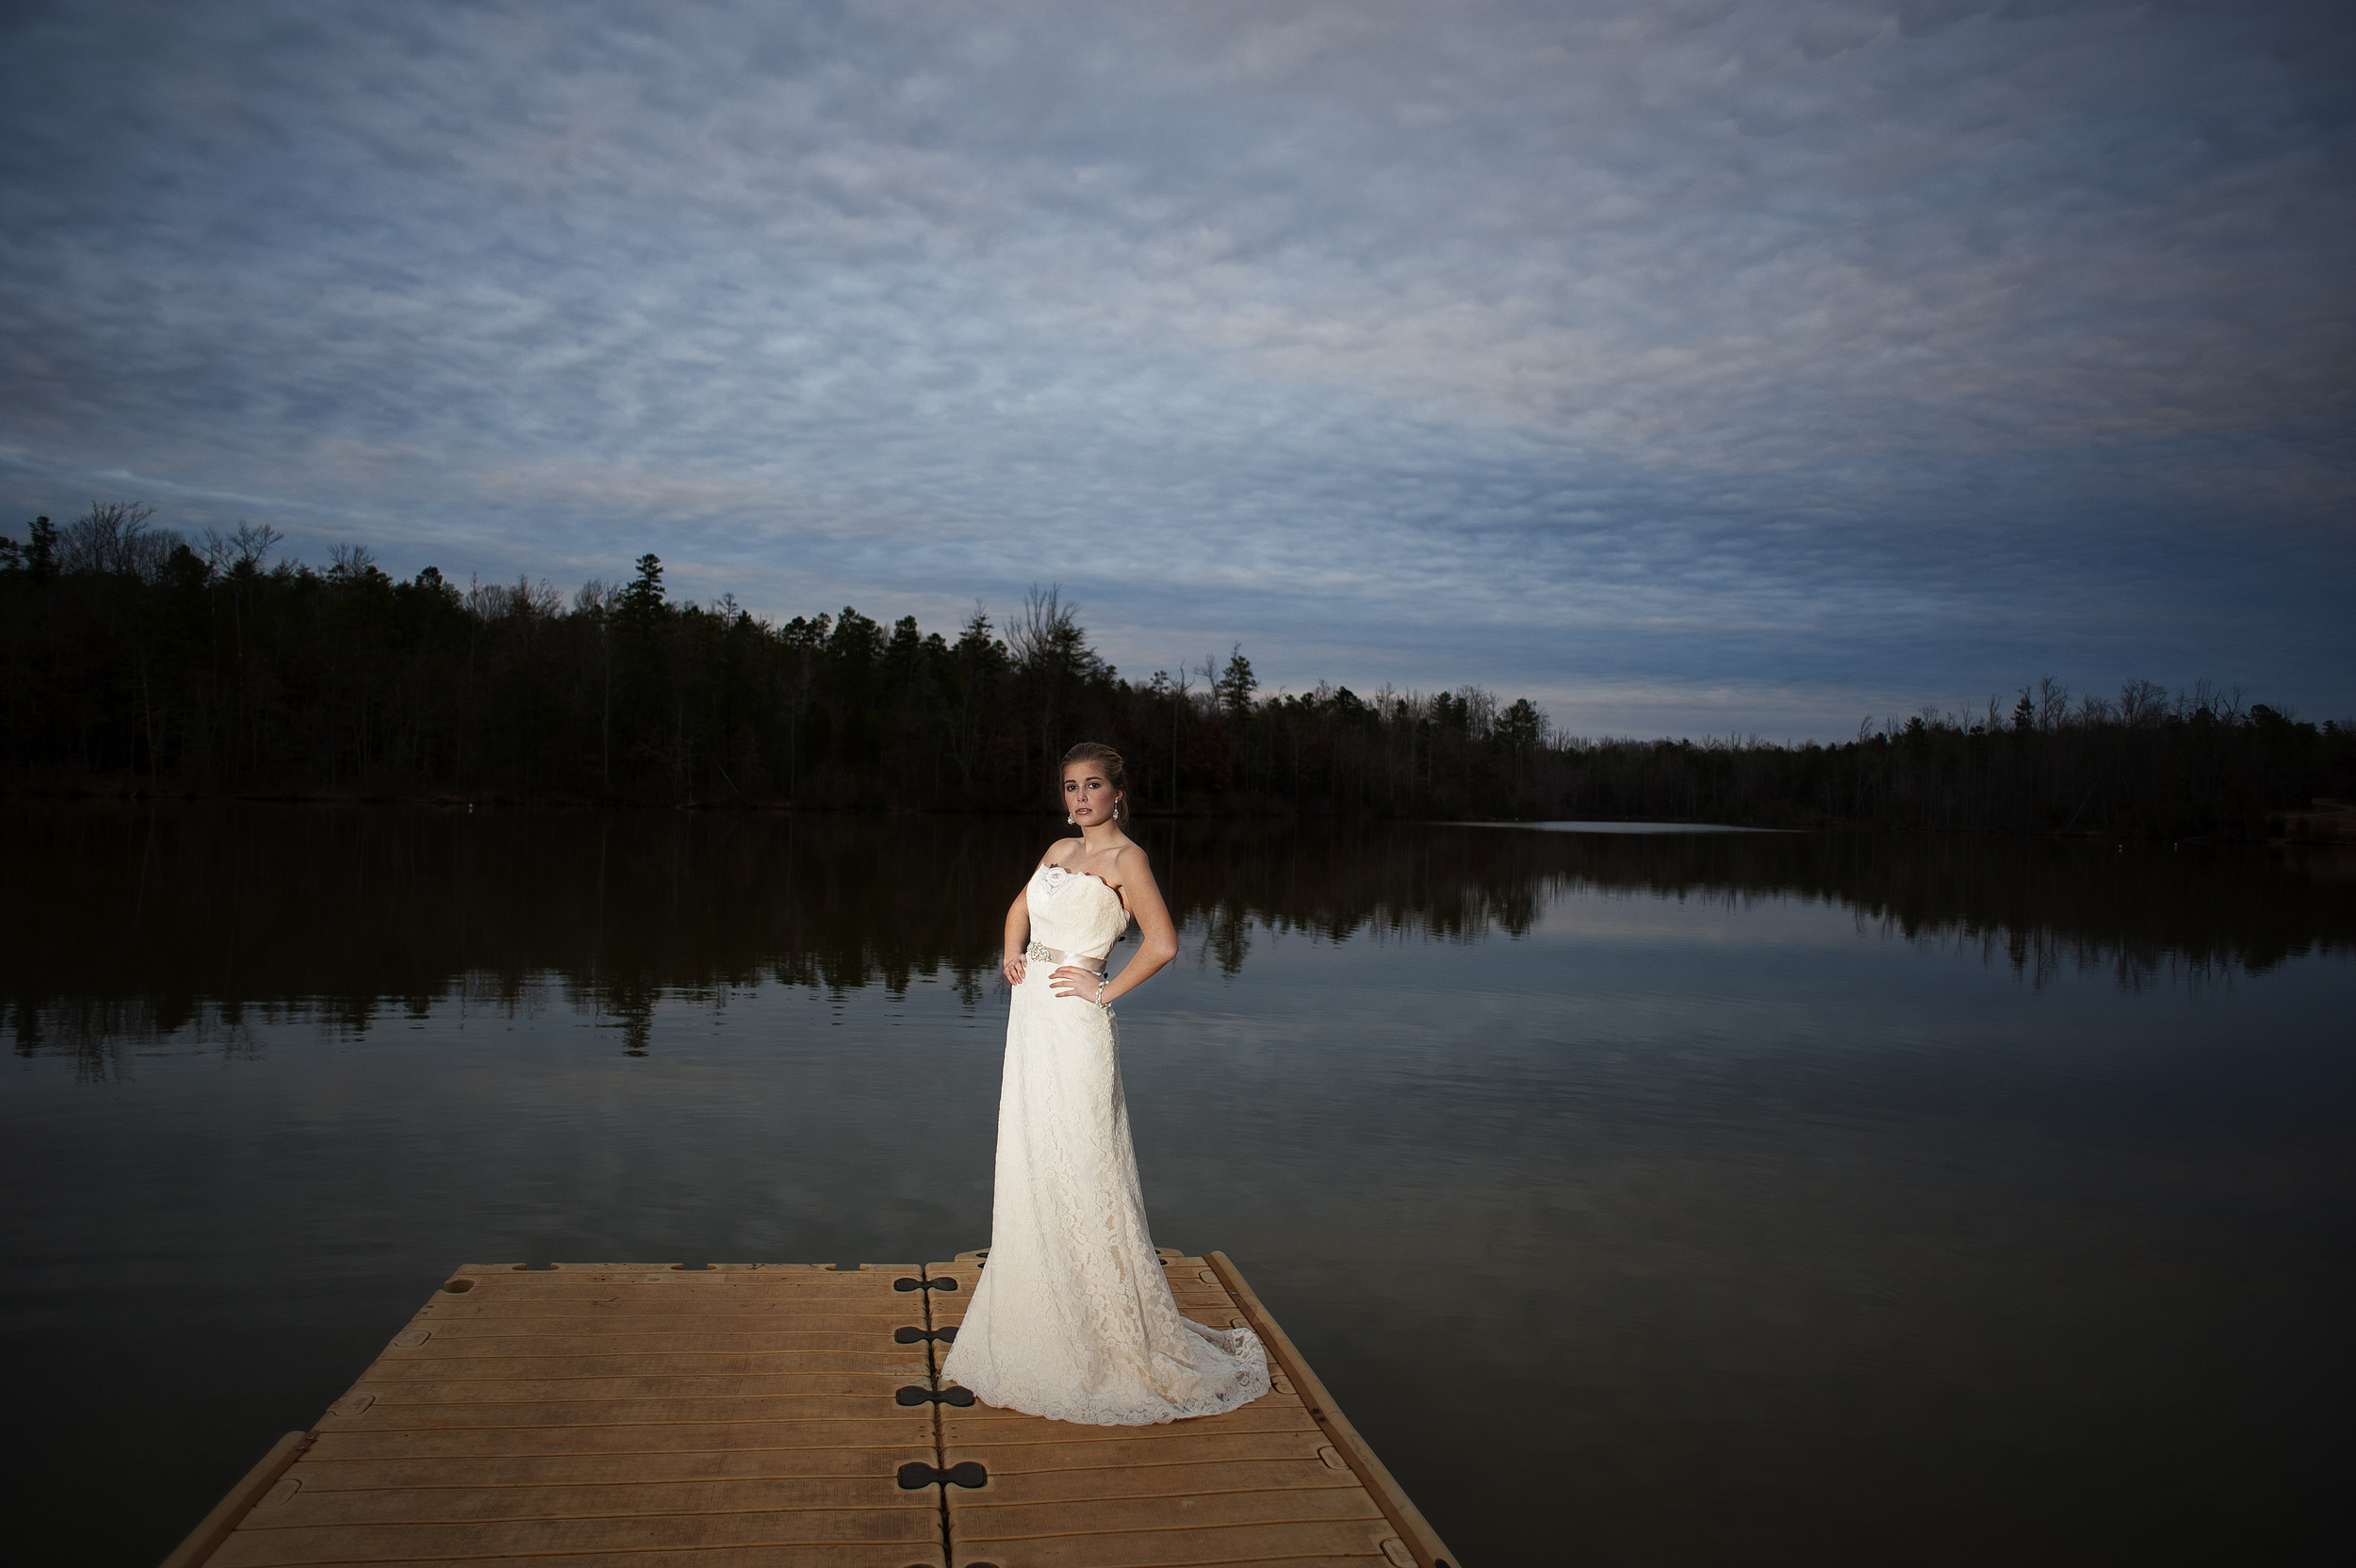 A Bridal Portrait by the Lake - Peter Farrar